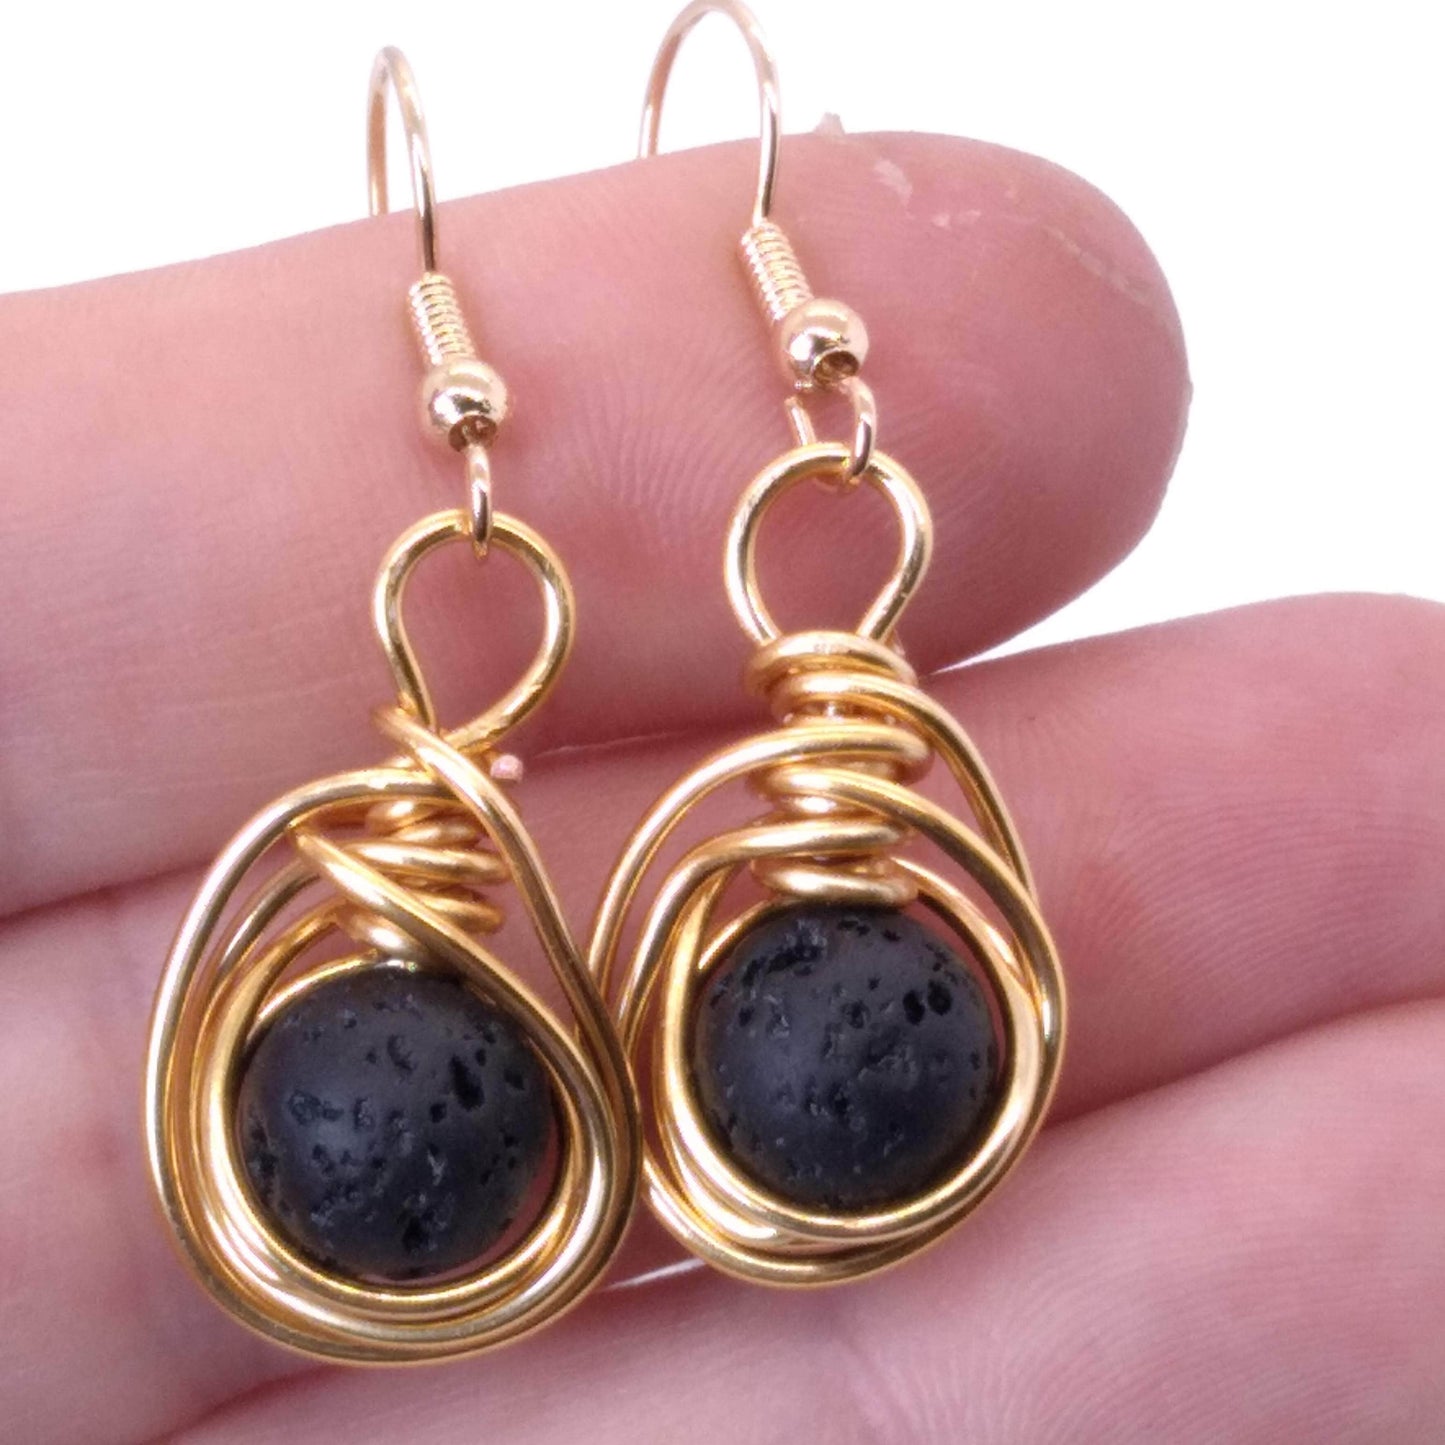 Herringbone earrings with lava rock bead